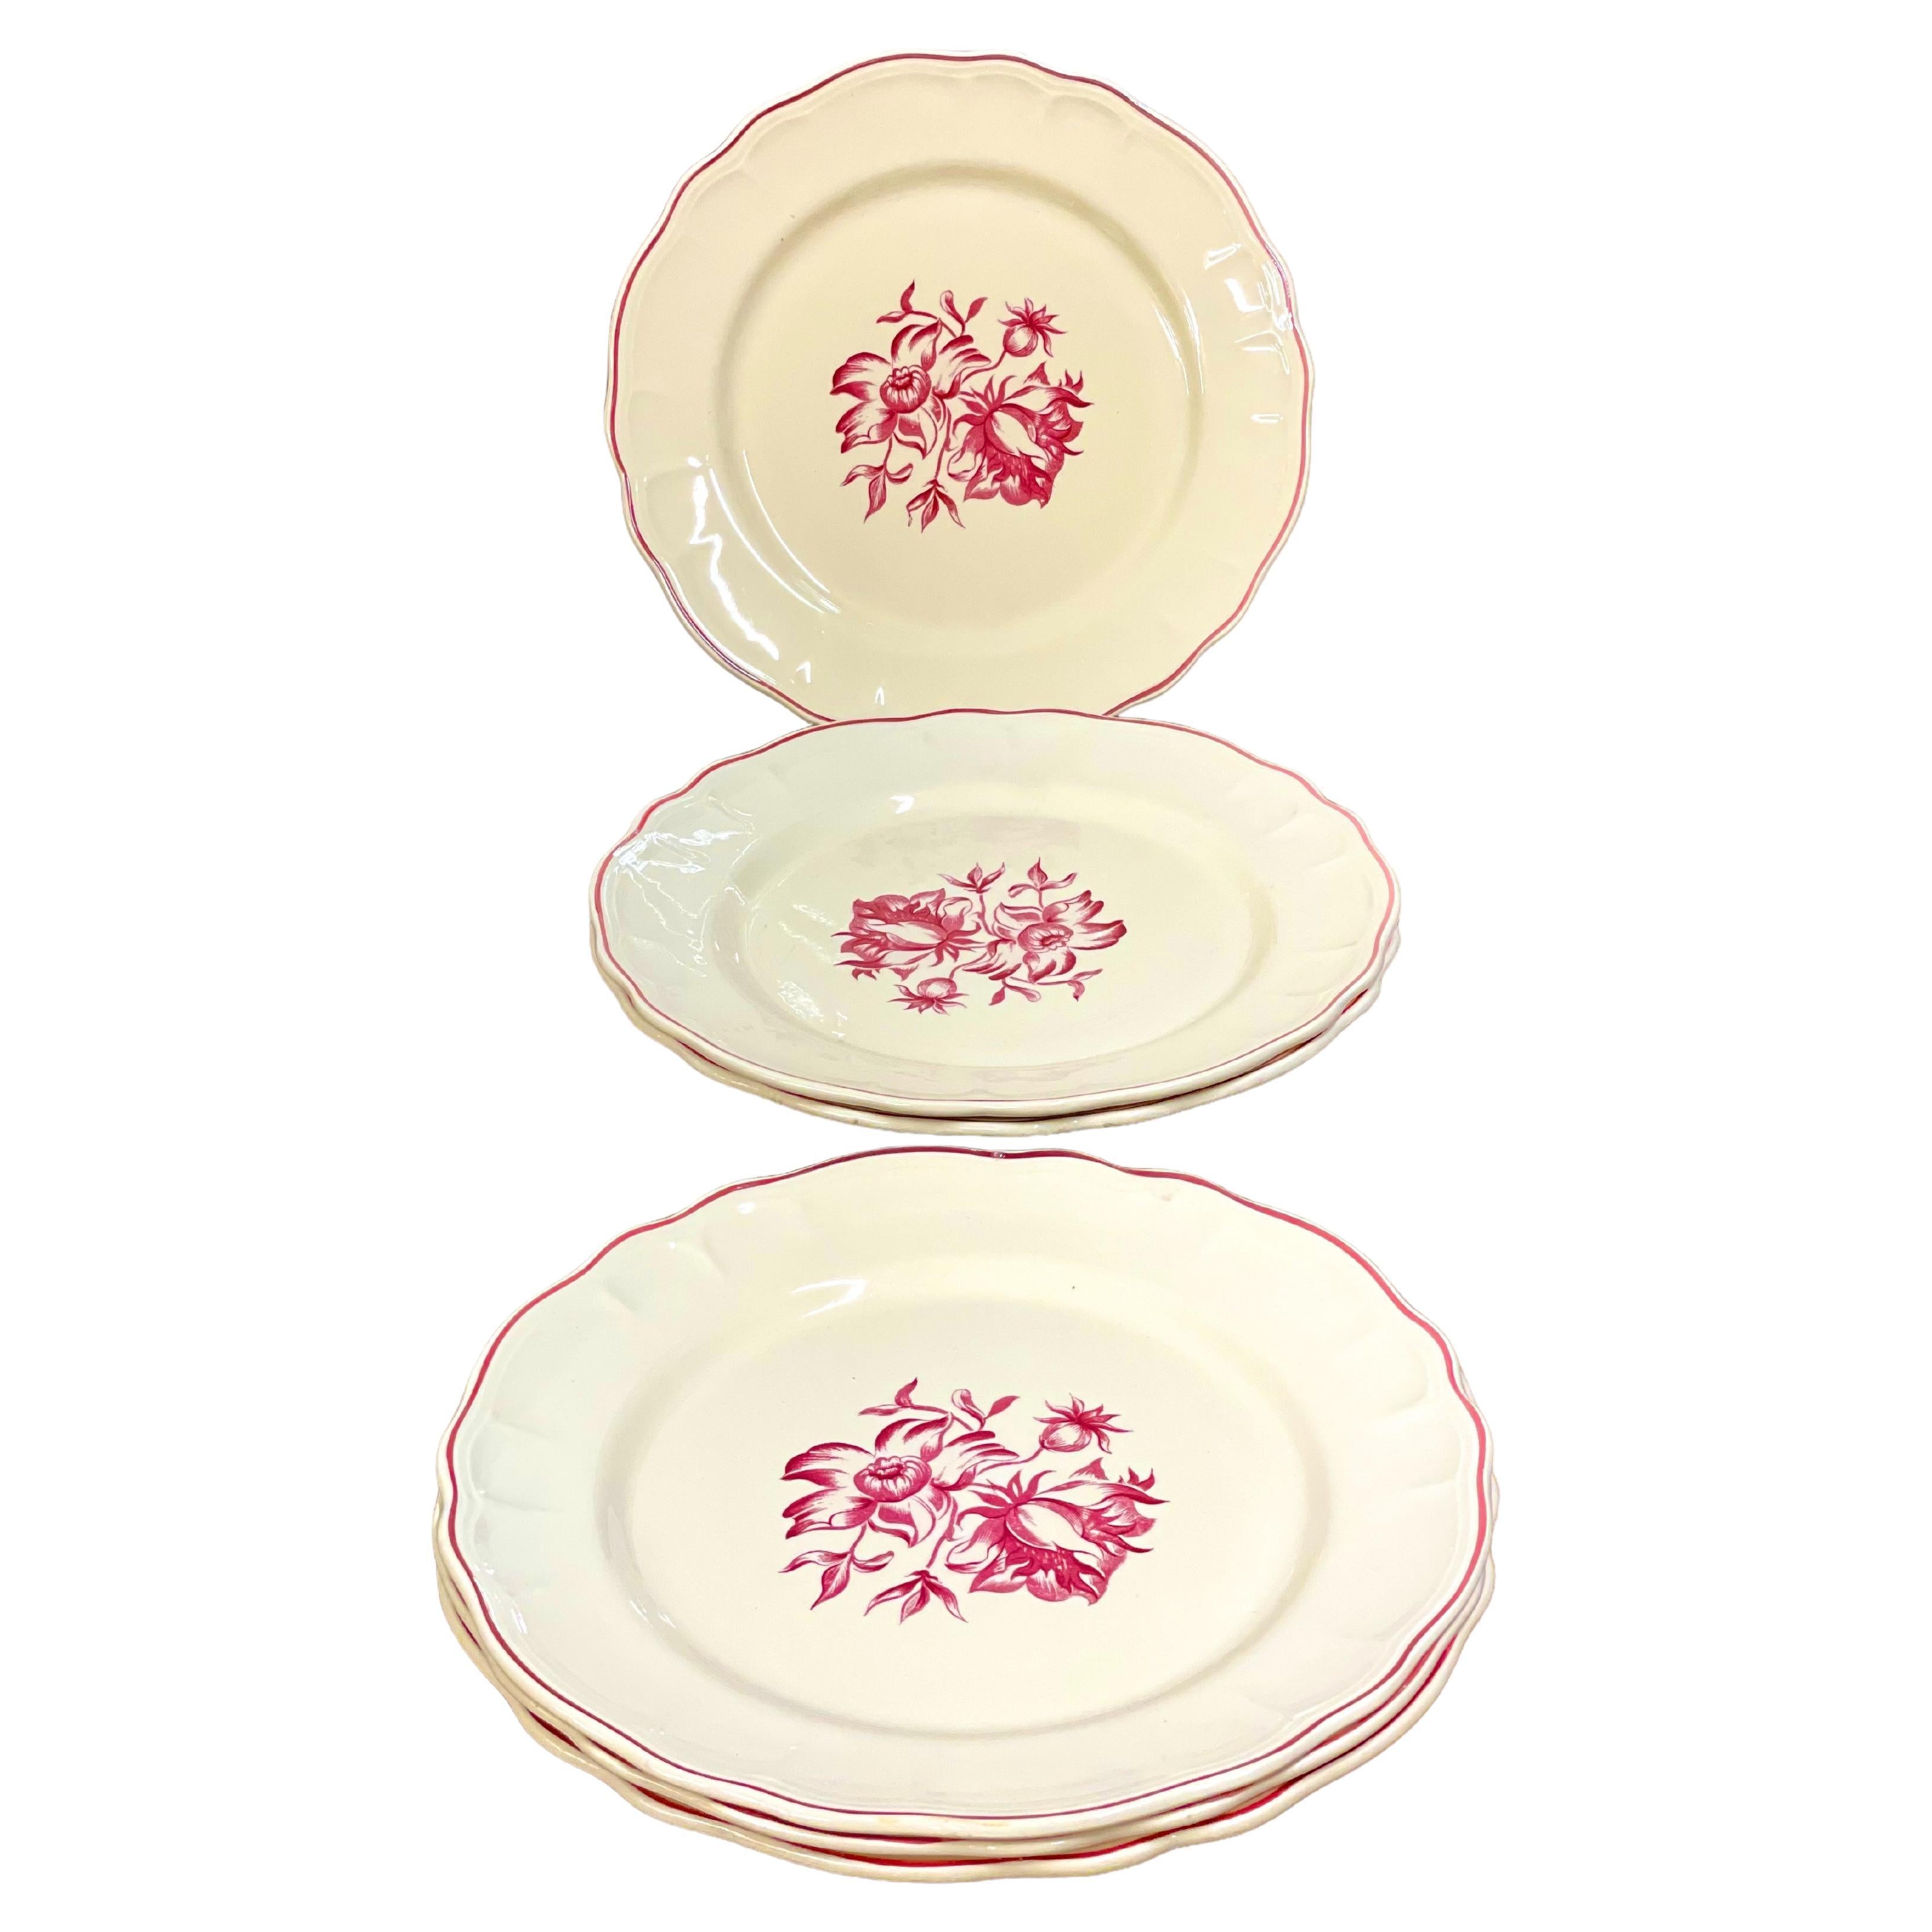 Set of Six Vintage Creamware Plates